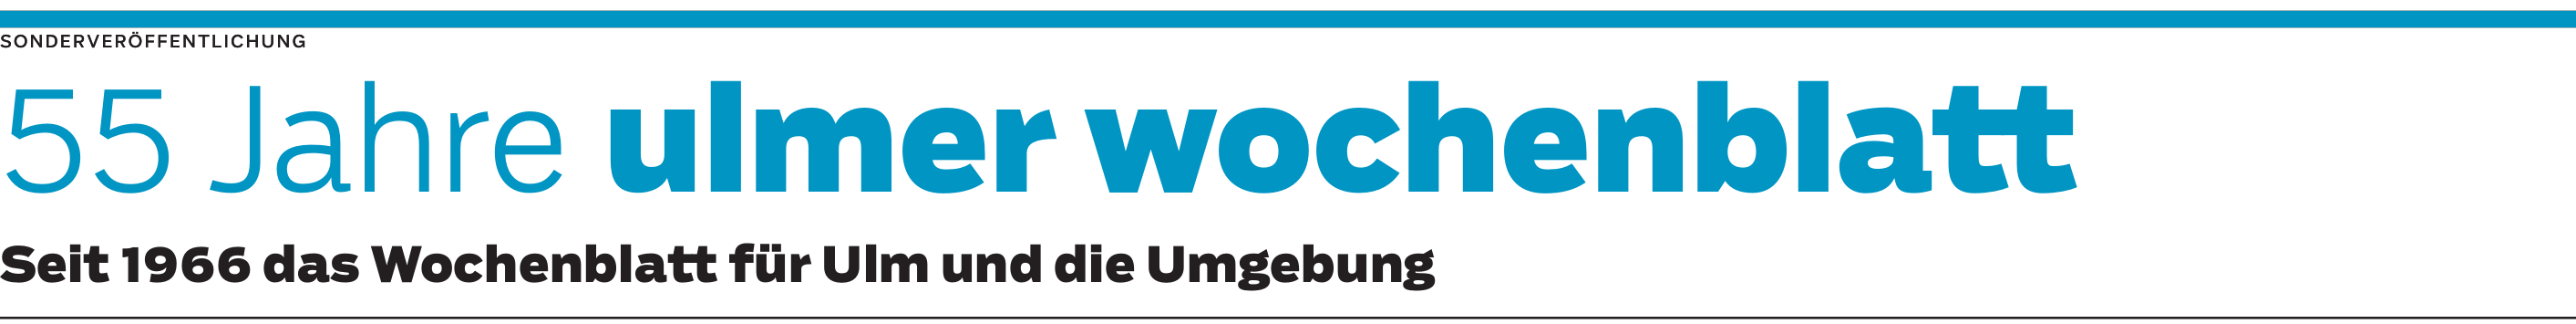 Ulmer Wochenblatt: Seit 1966 in Ulm und um Ulm